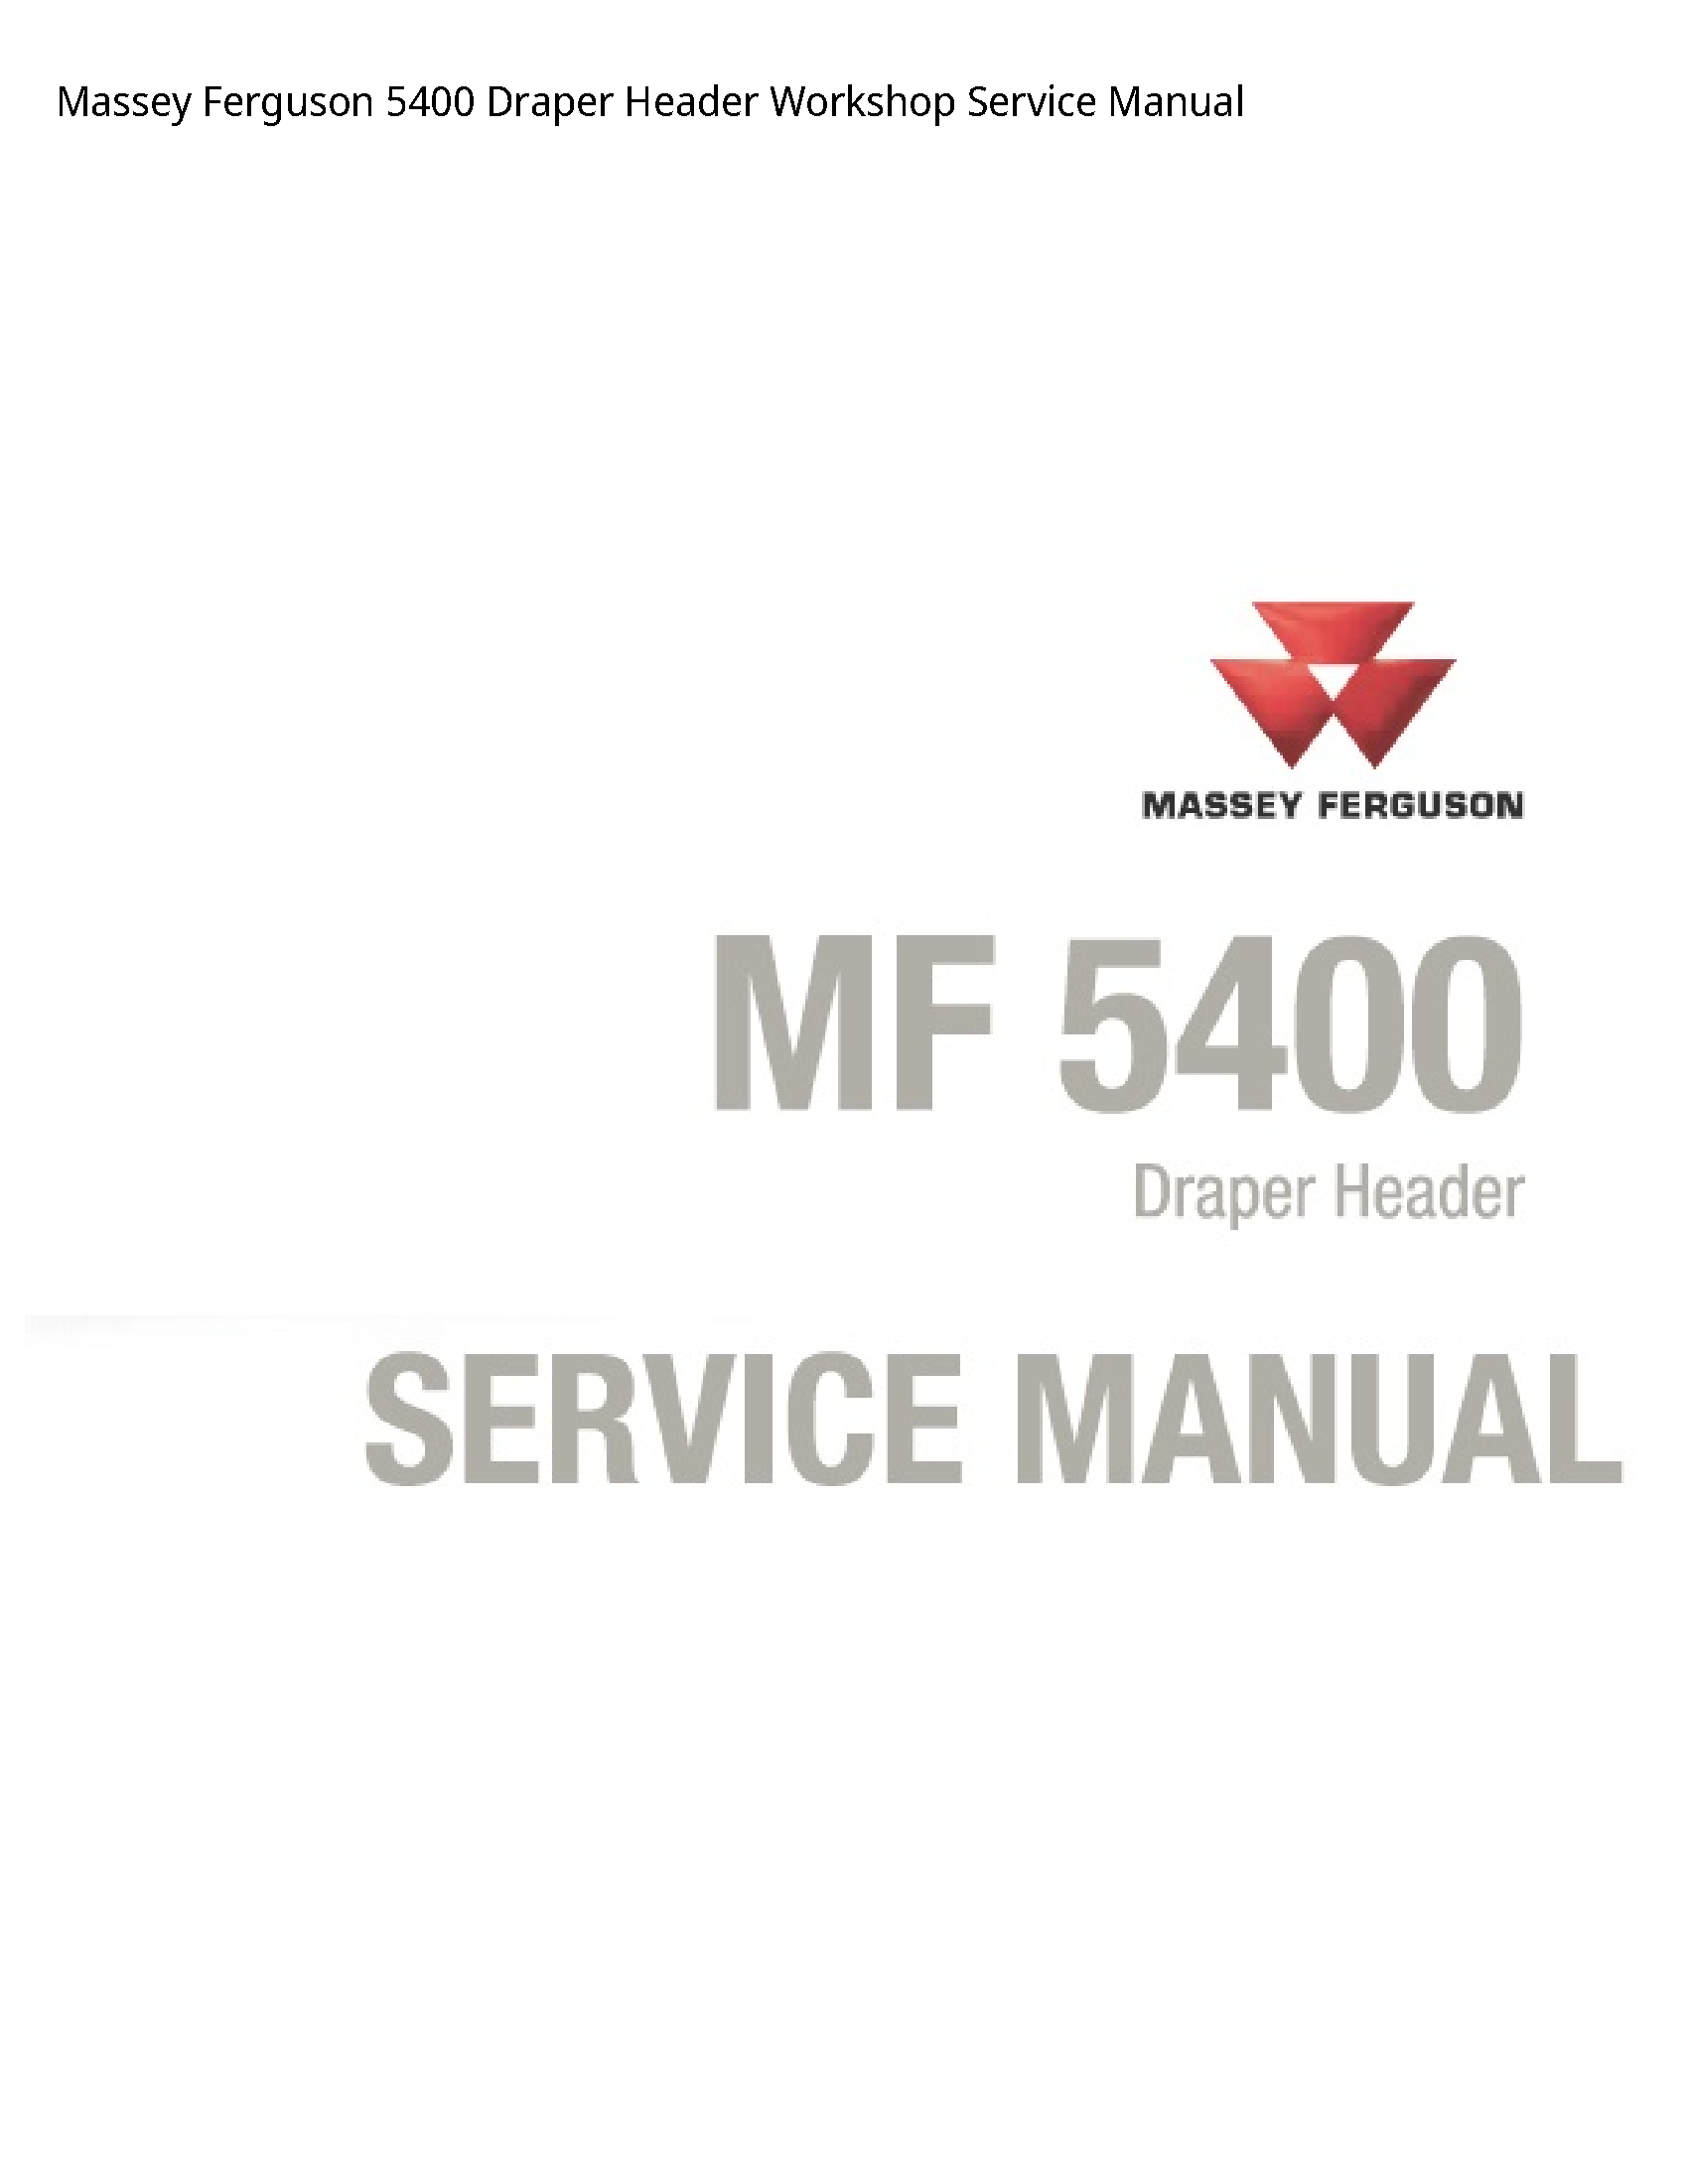 Massey Ferguson 5400 Draper Header Service manual